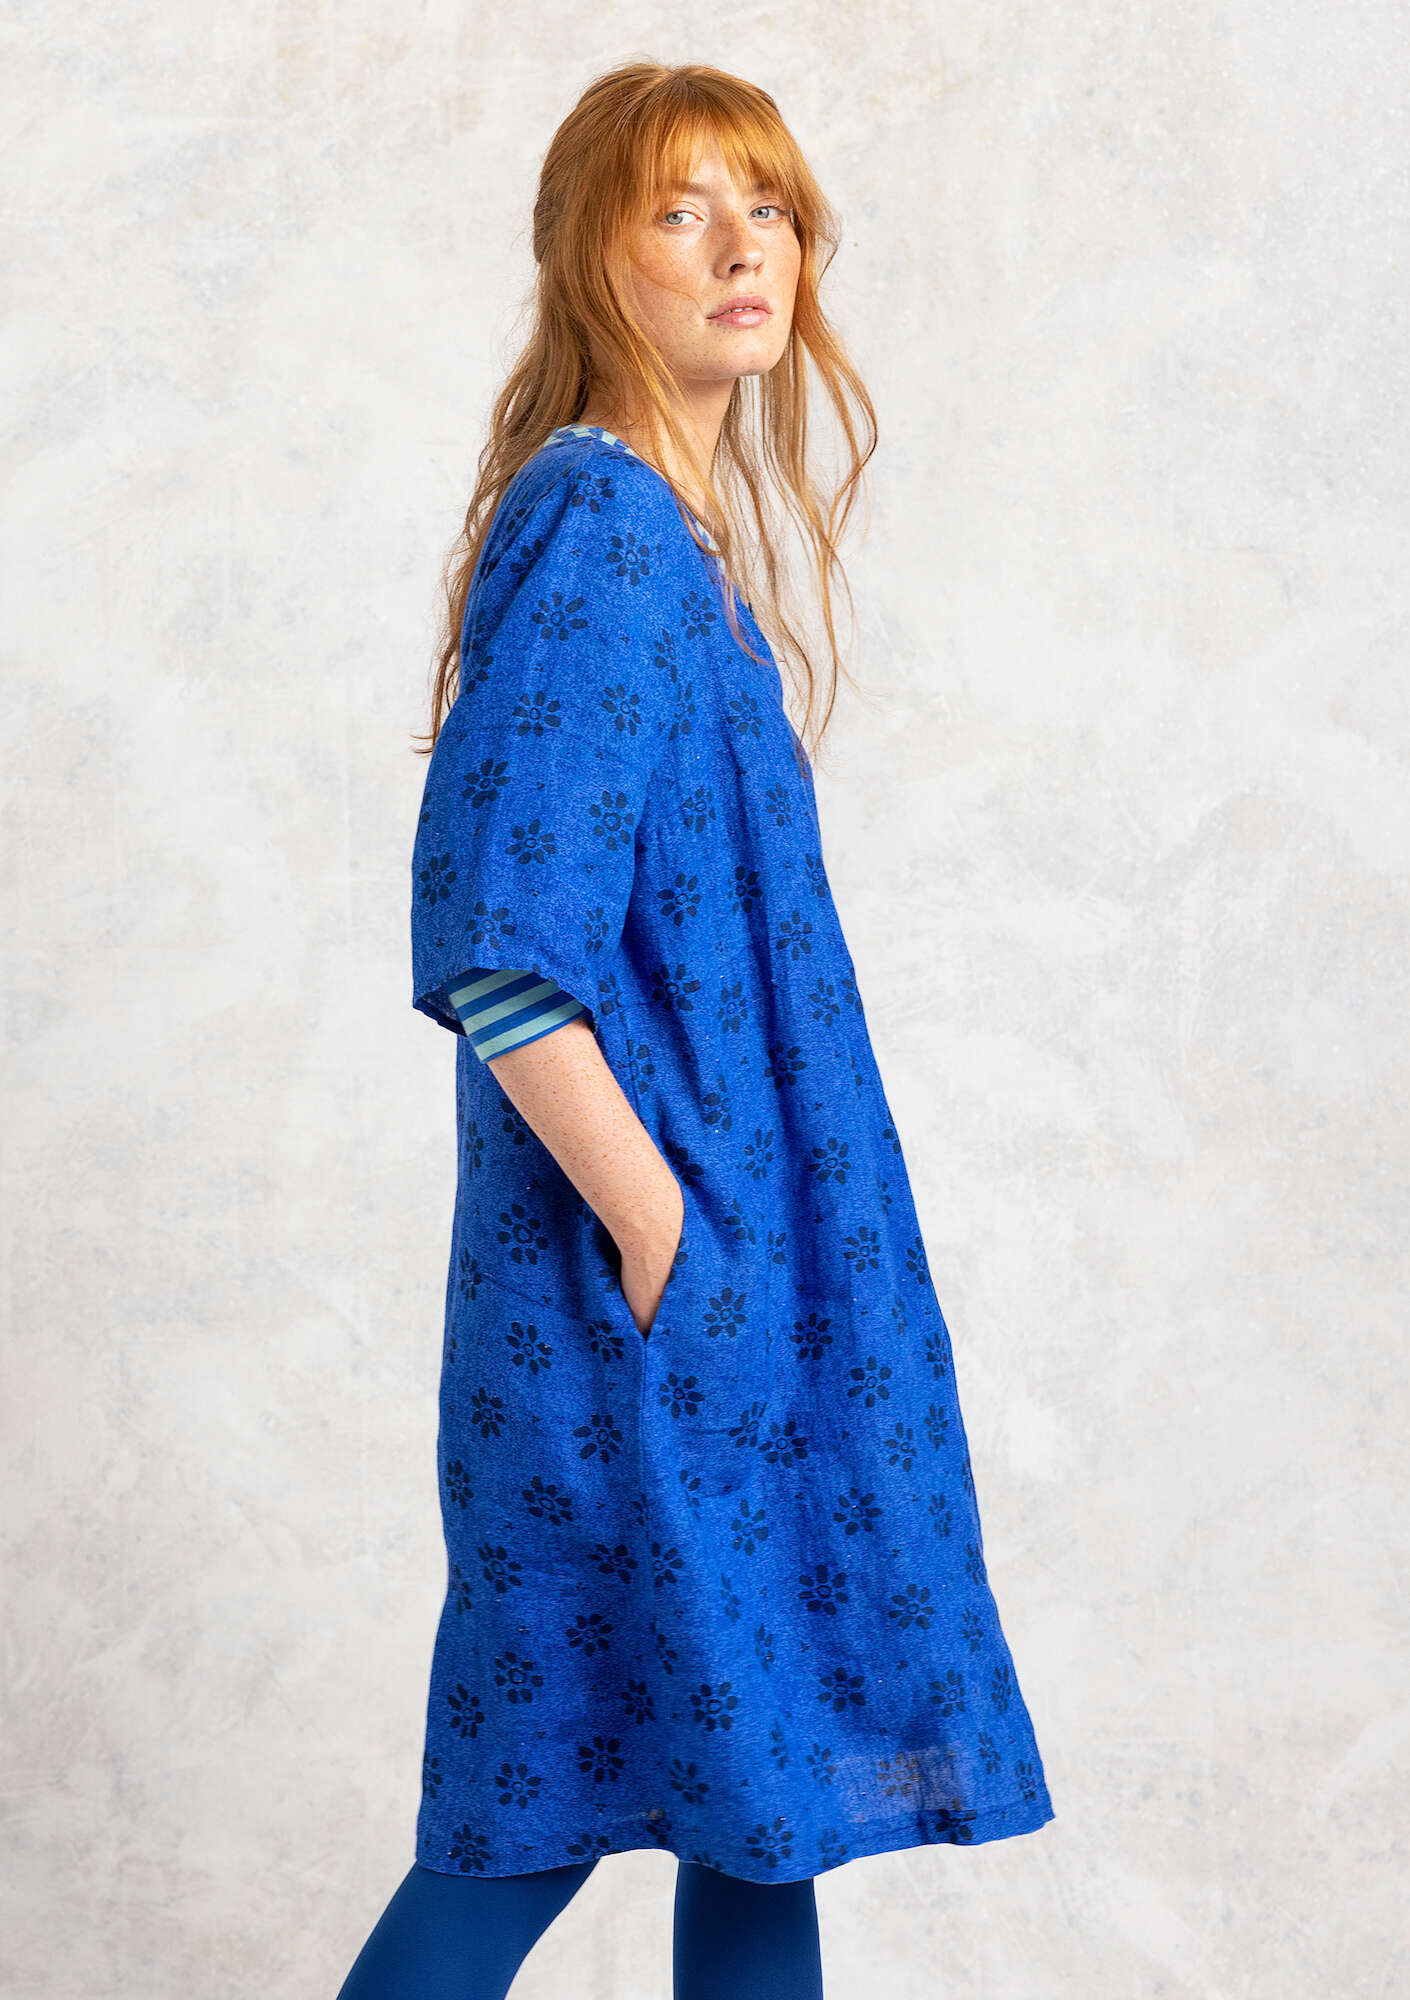 Robe tissée  Ester  en lin bleu saphir/motif